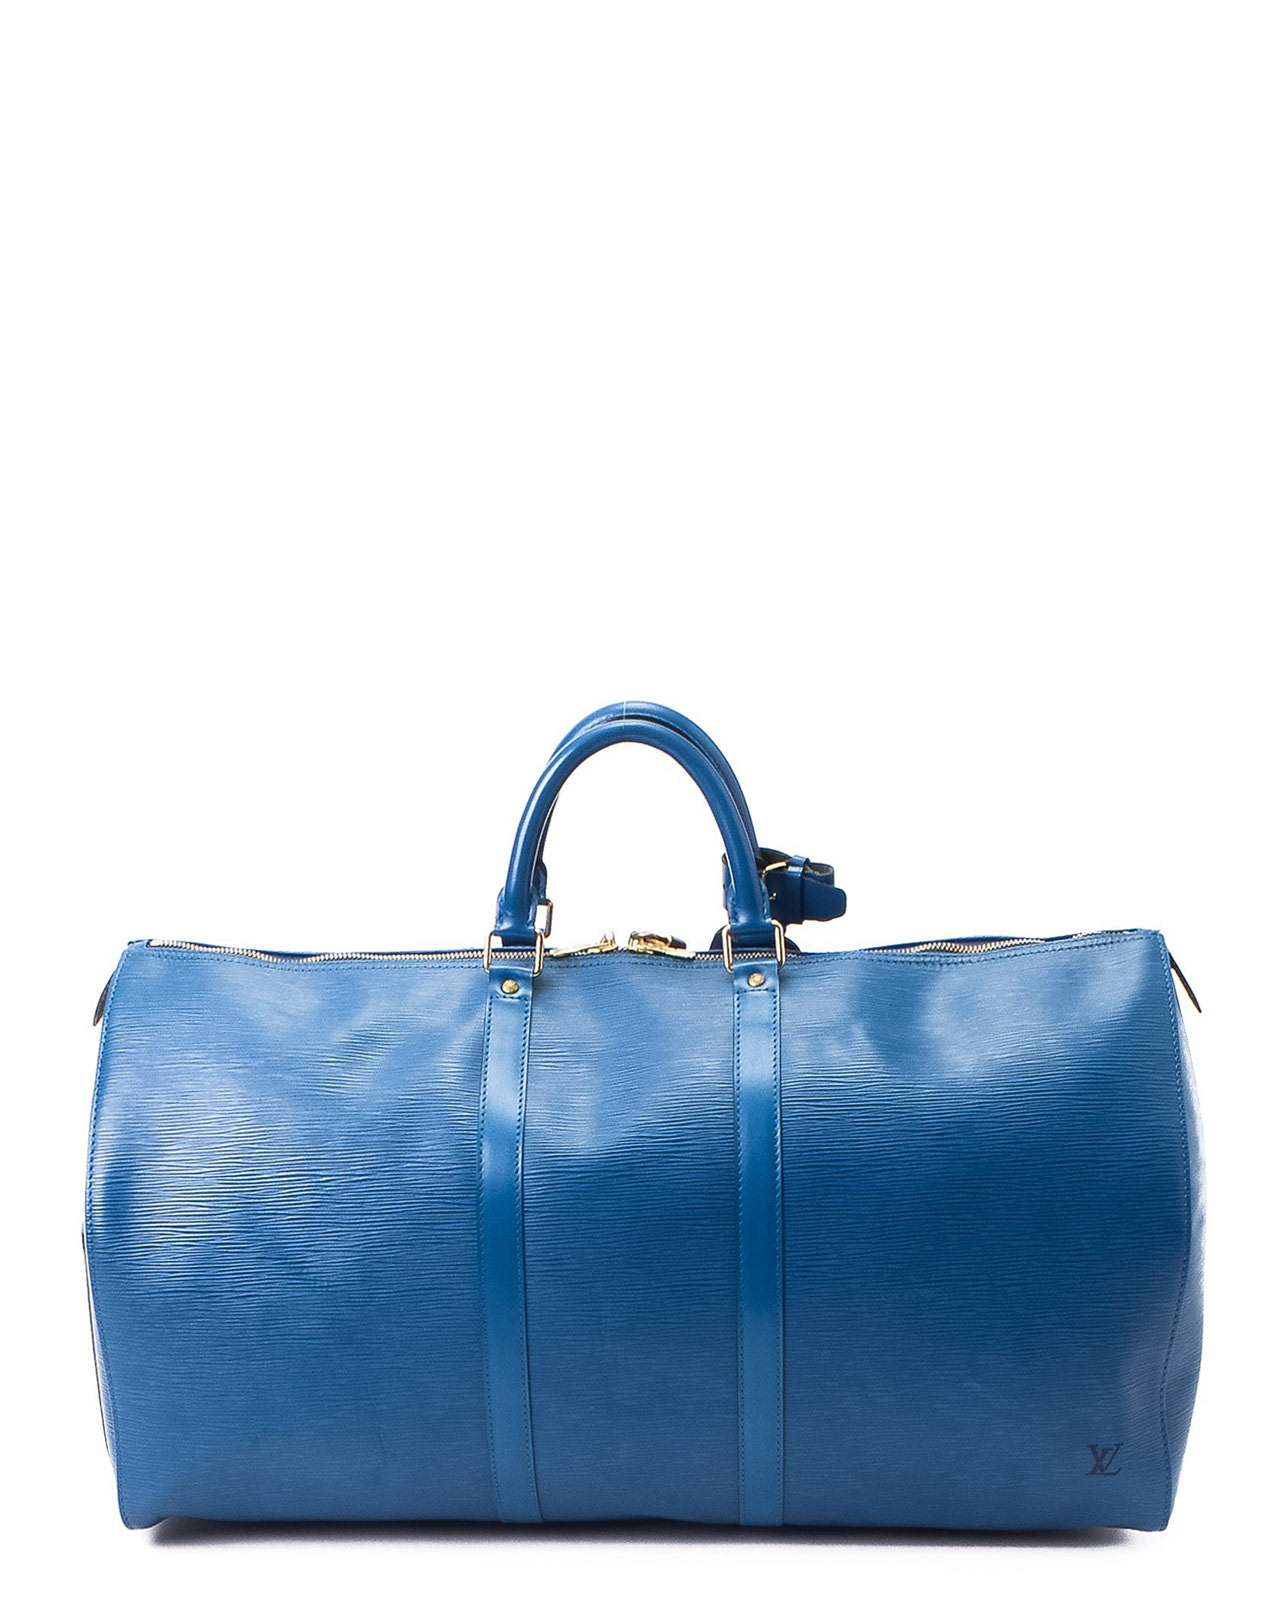 Lyst - Louis vuitton Blue Keepall 55 Bag in Blue